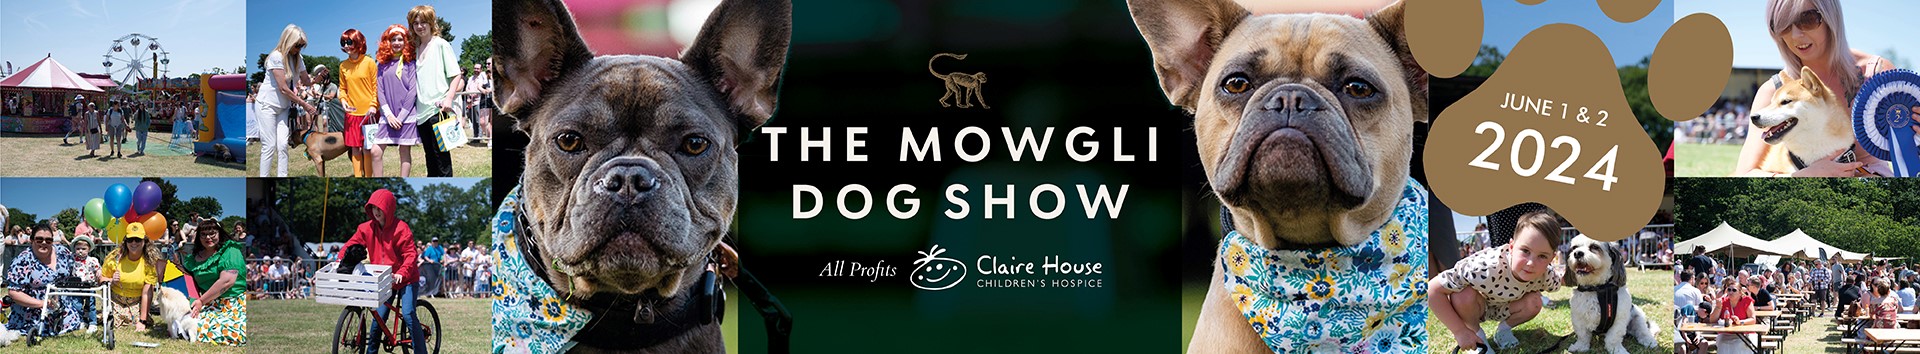 Mowgli Dog Show